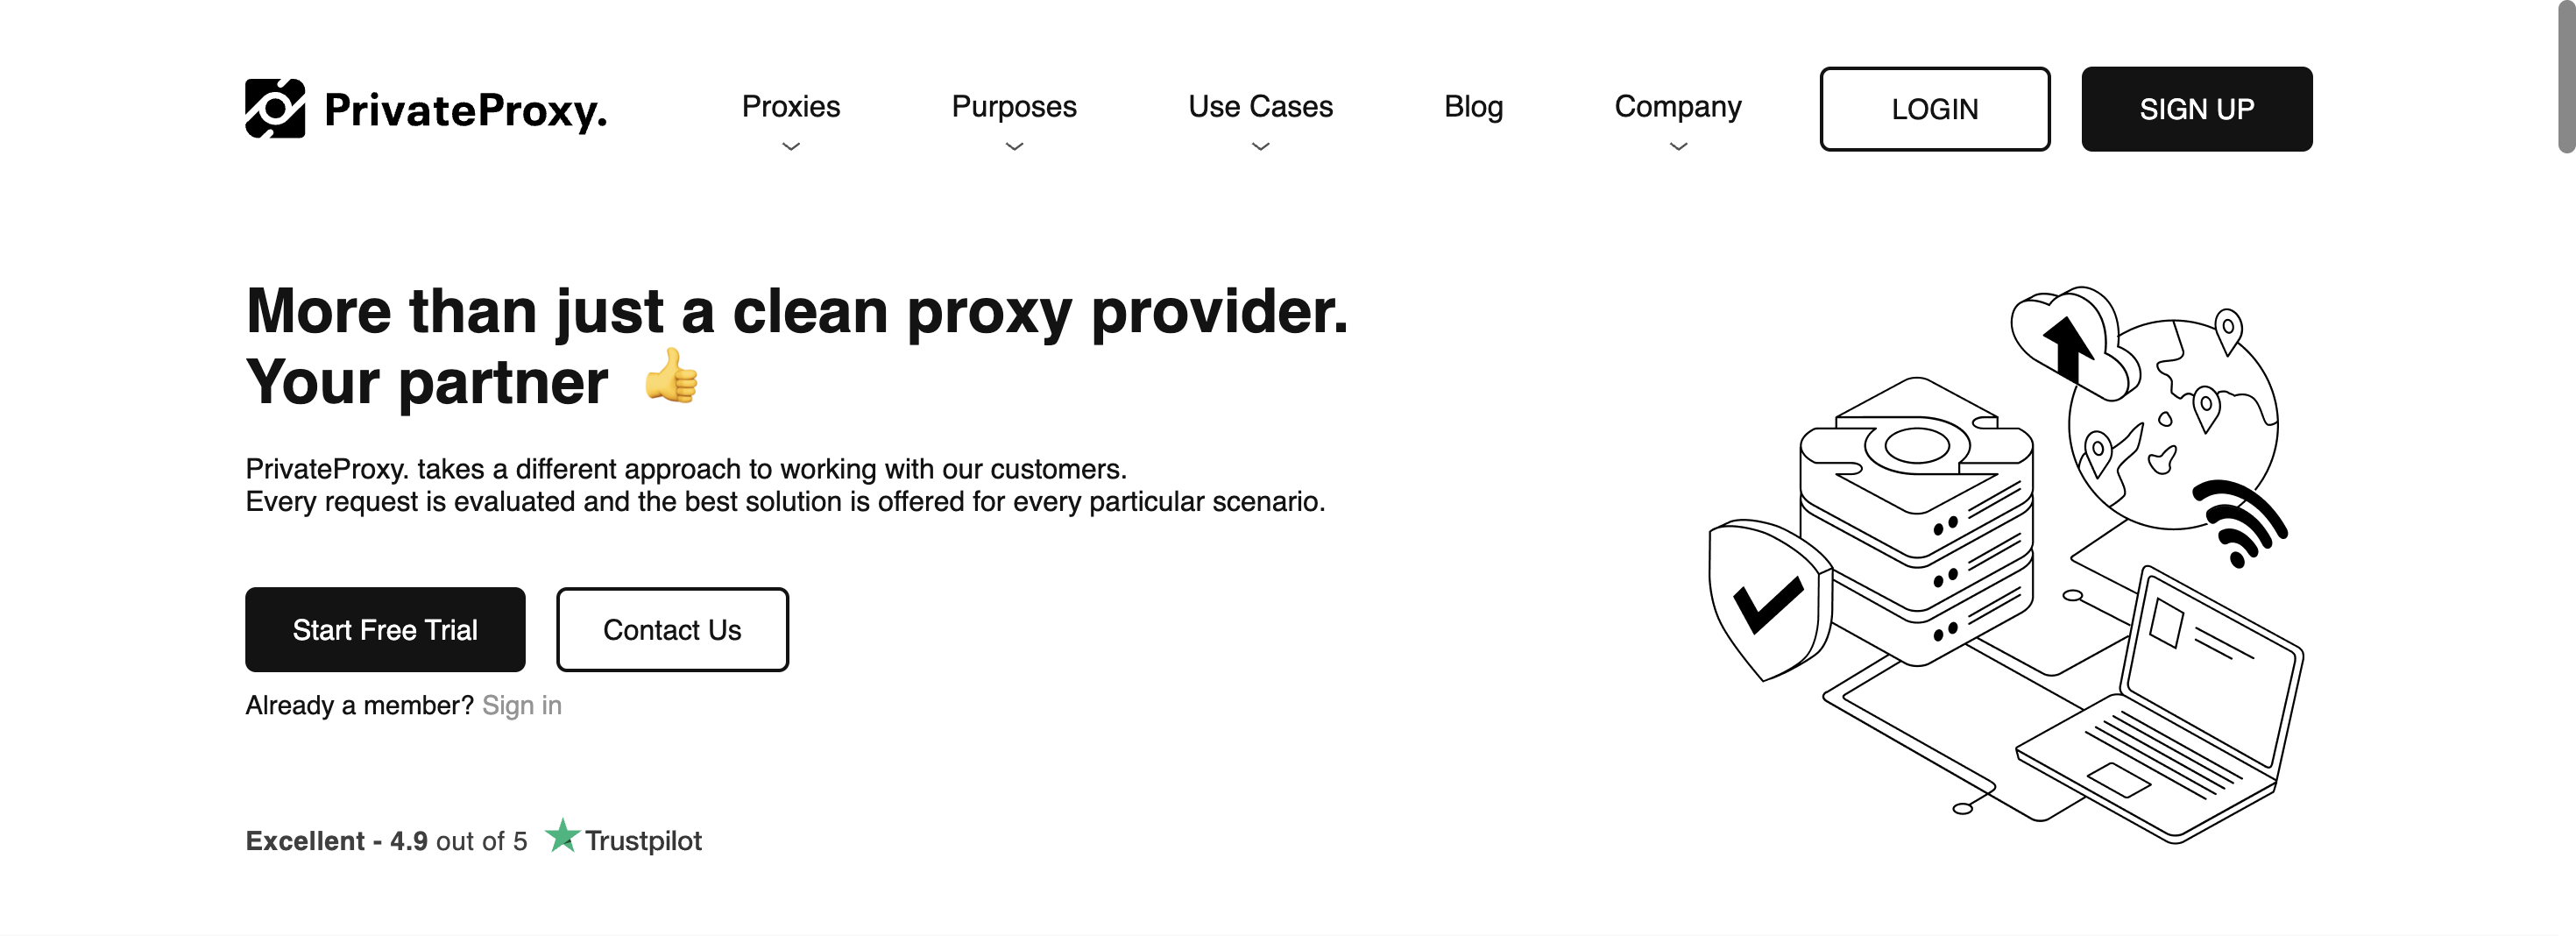 Privateproxy